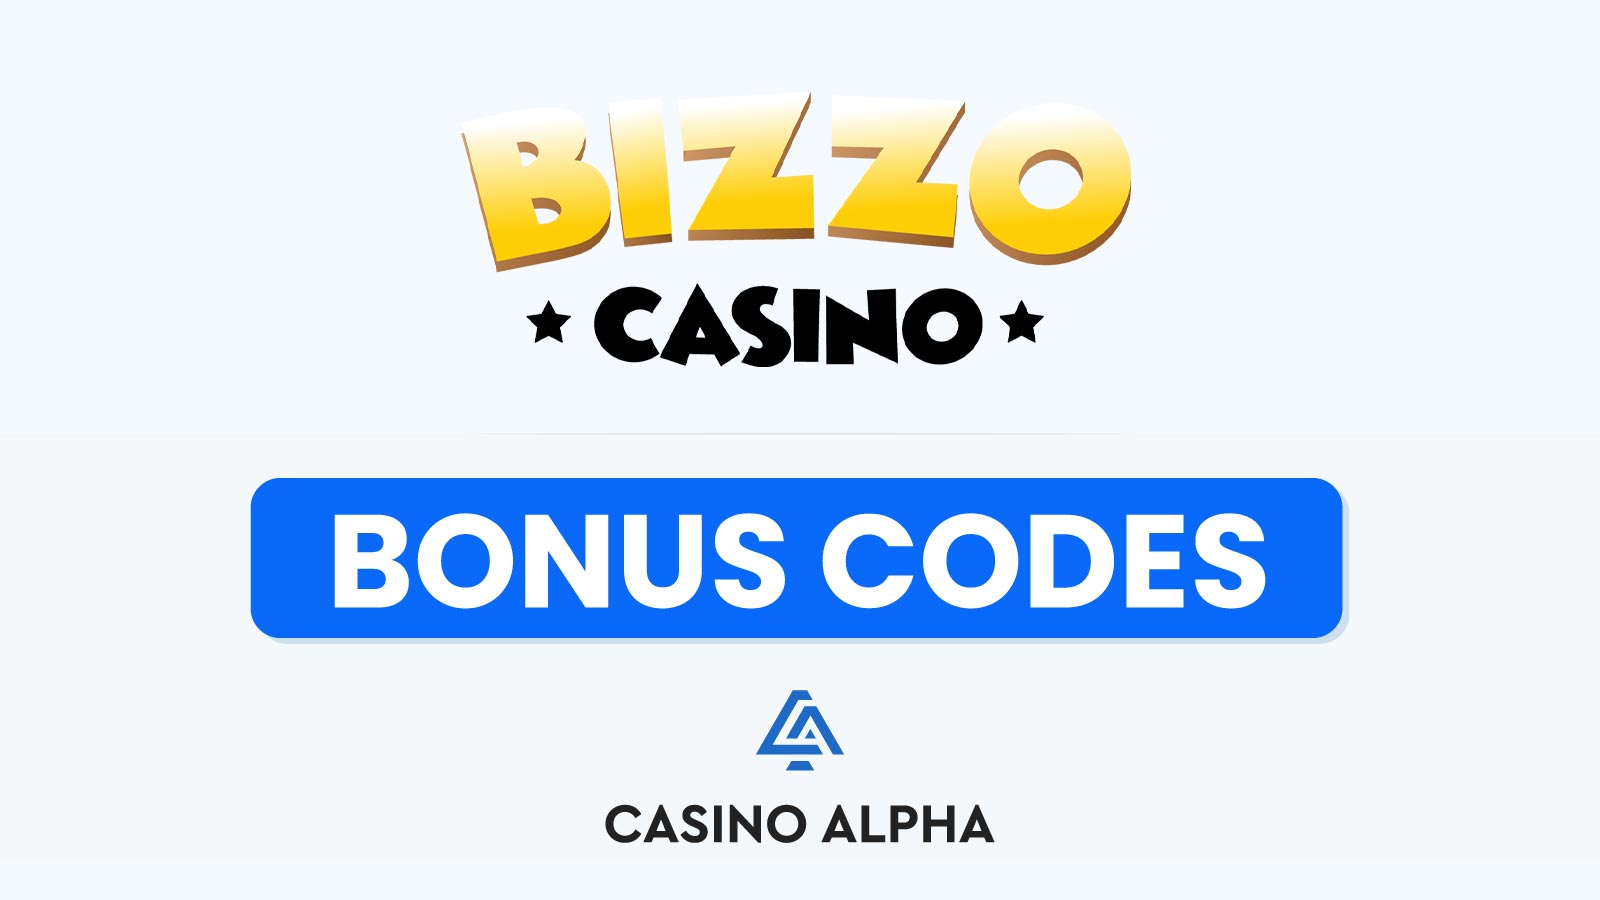 bizzo casino no deposit bonus codes